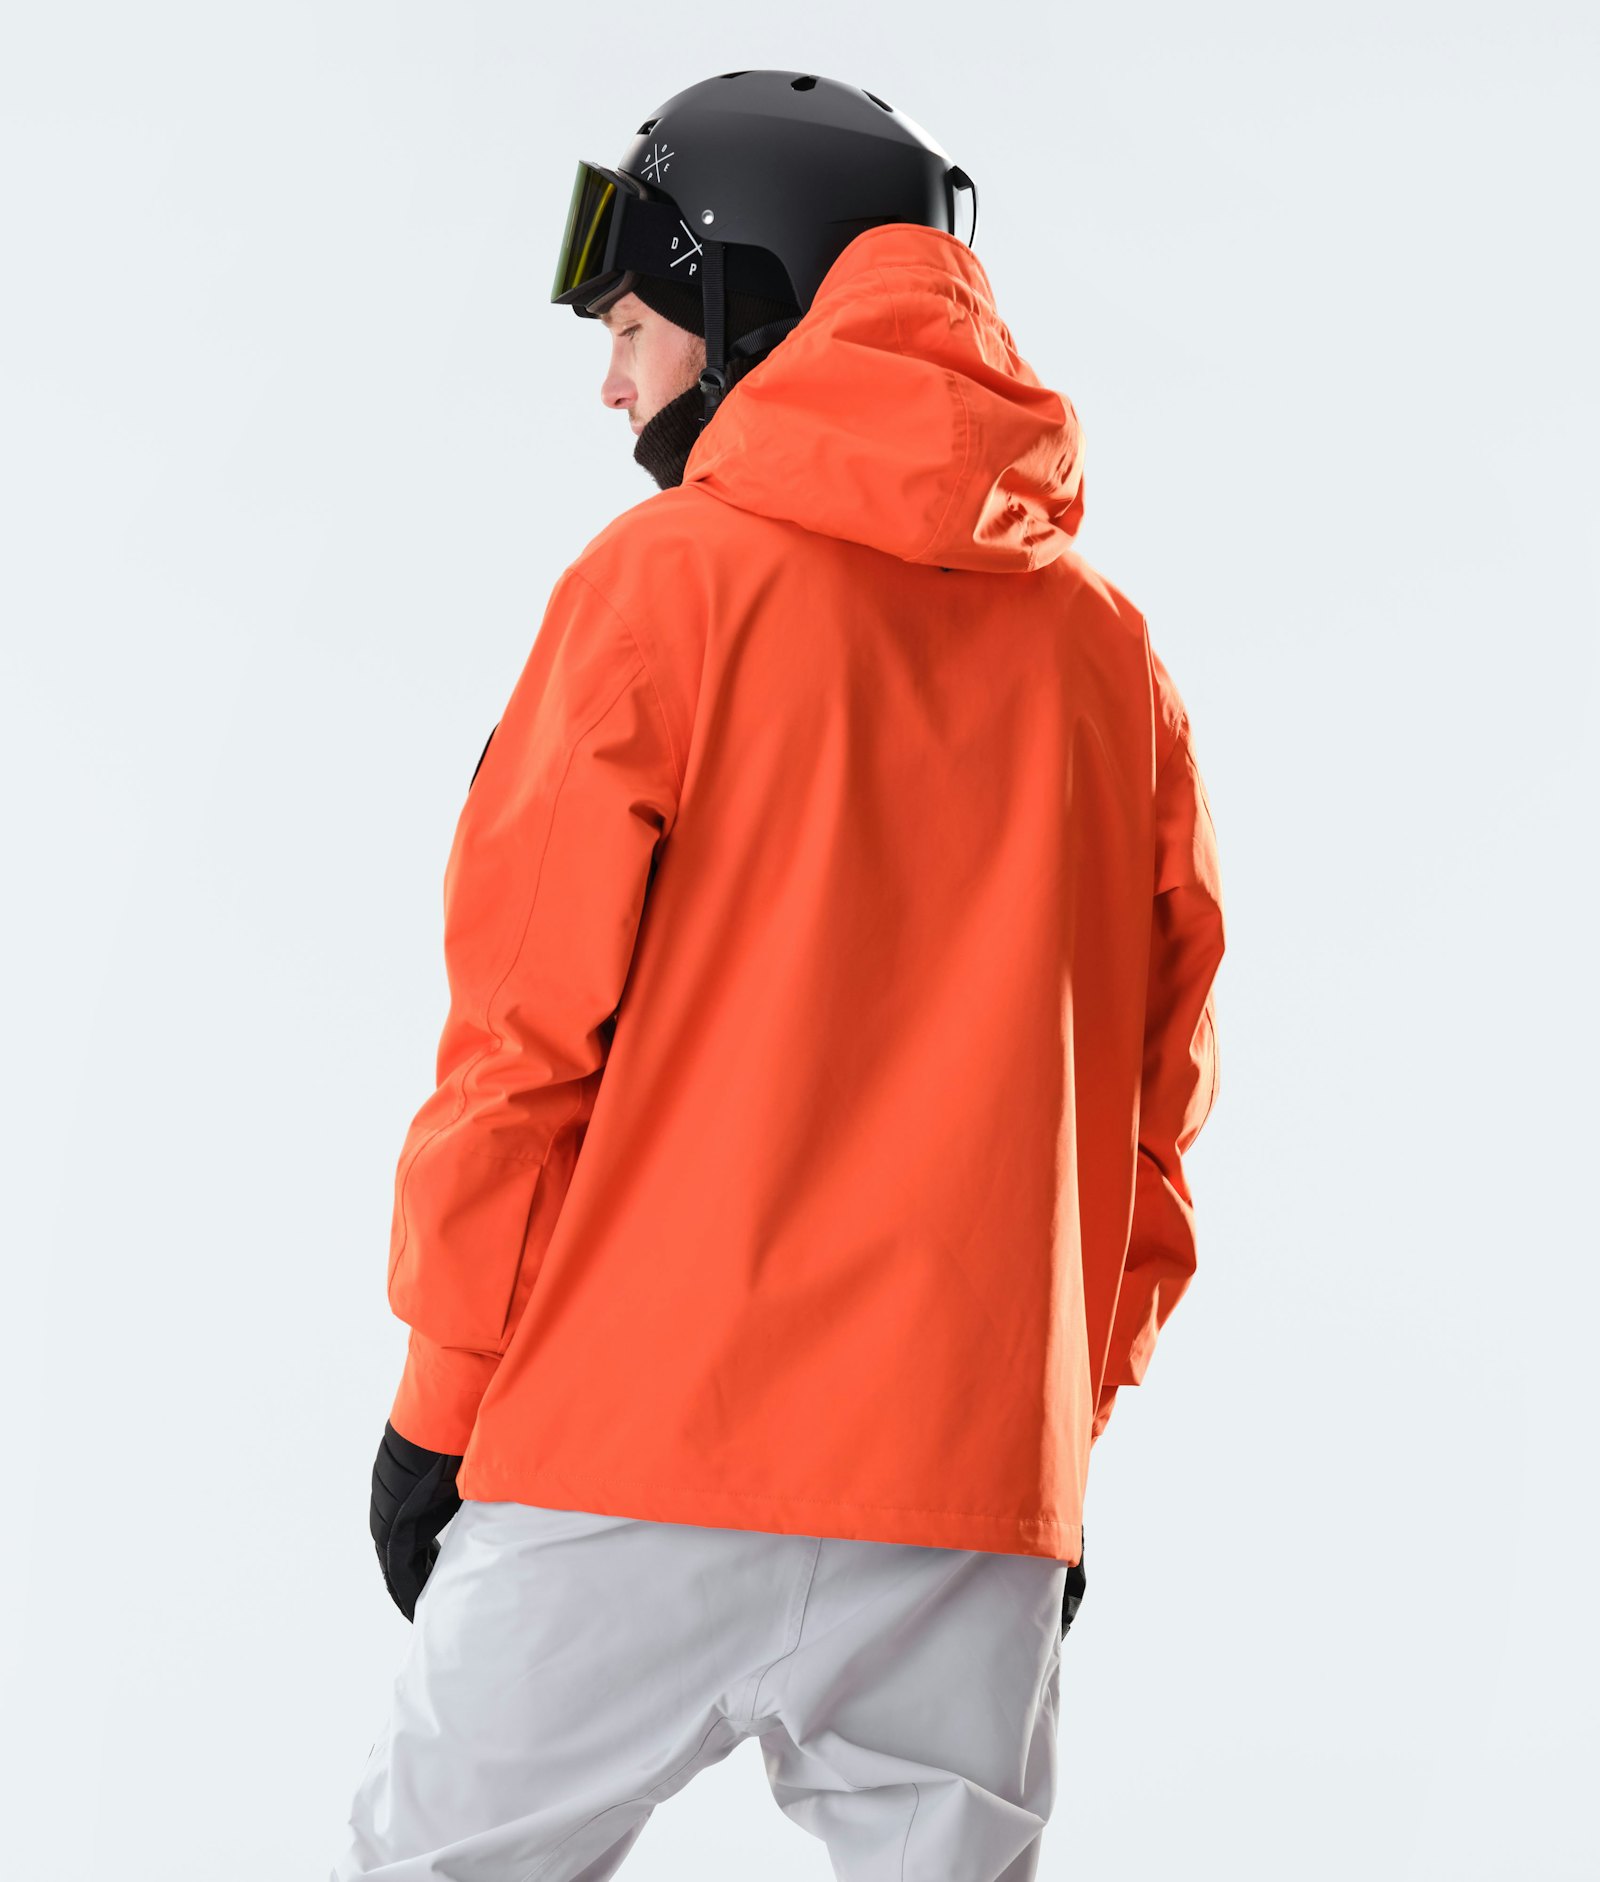 Blizzard 2020 Snowboardjakke Herre Orange